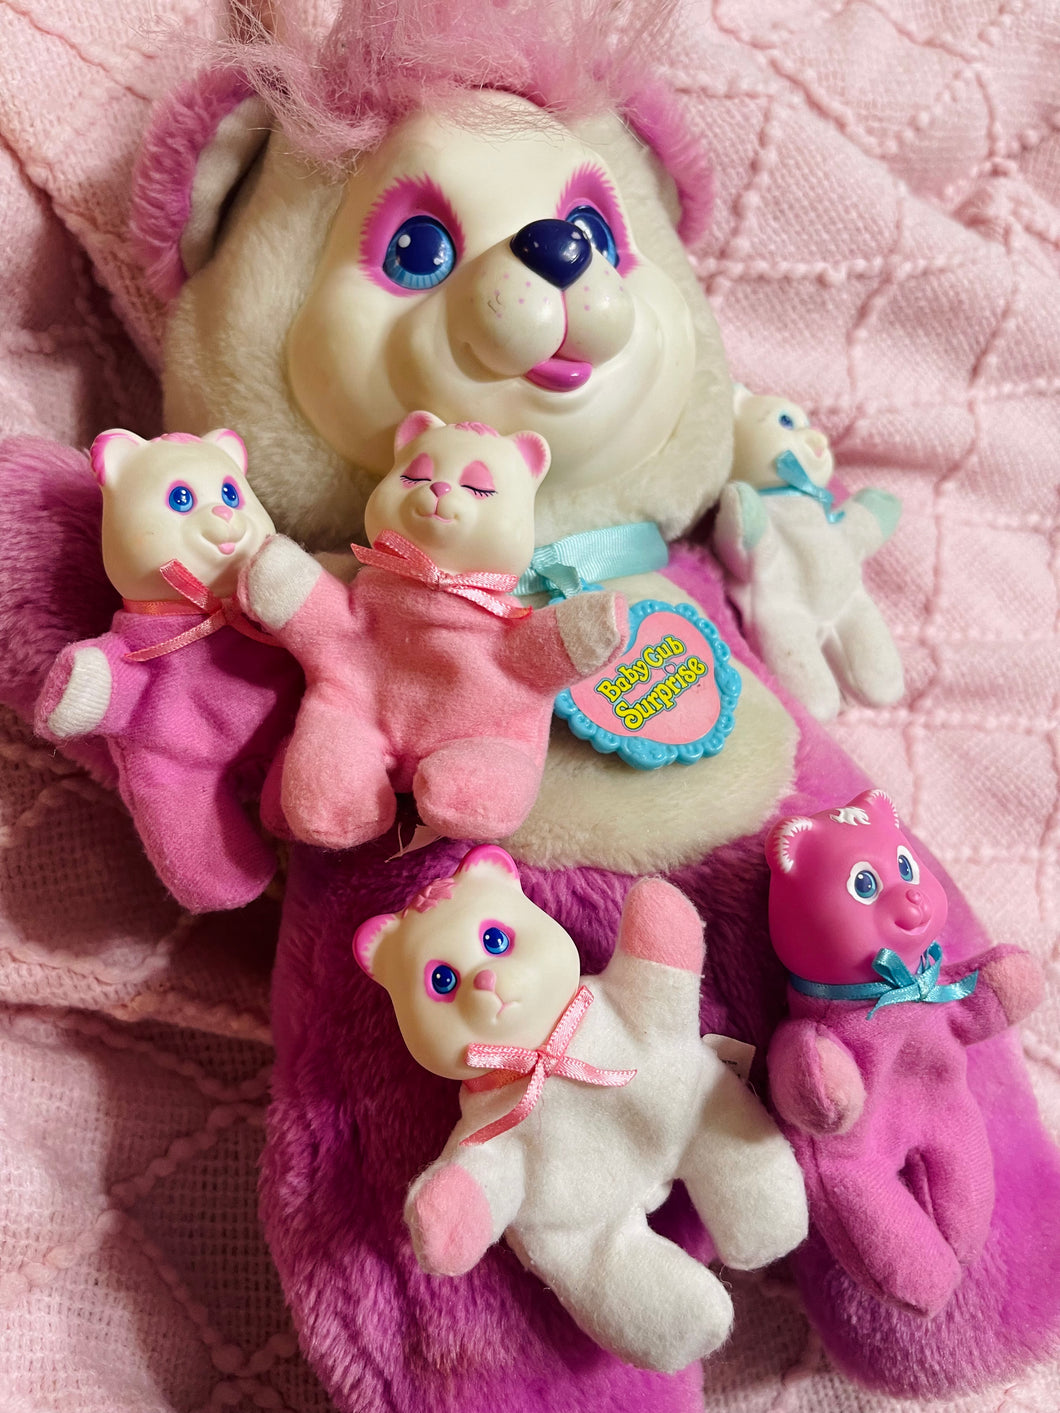 Baby Cub Surprise toy plush w/ 5 babies! - 13” - 1990s